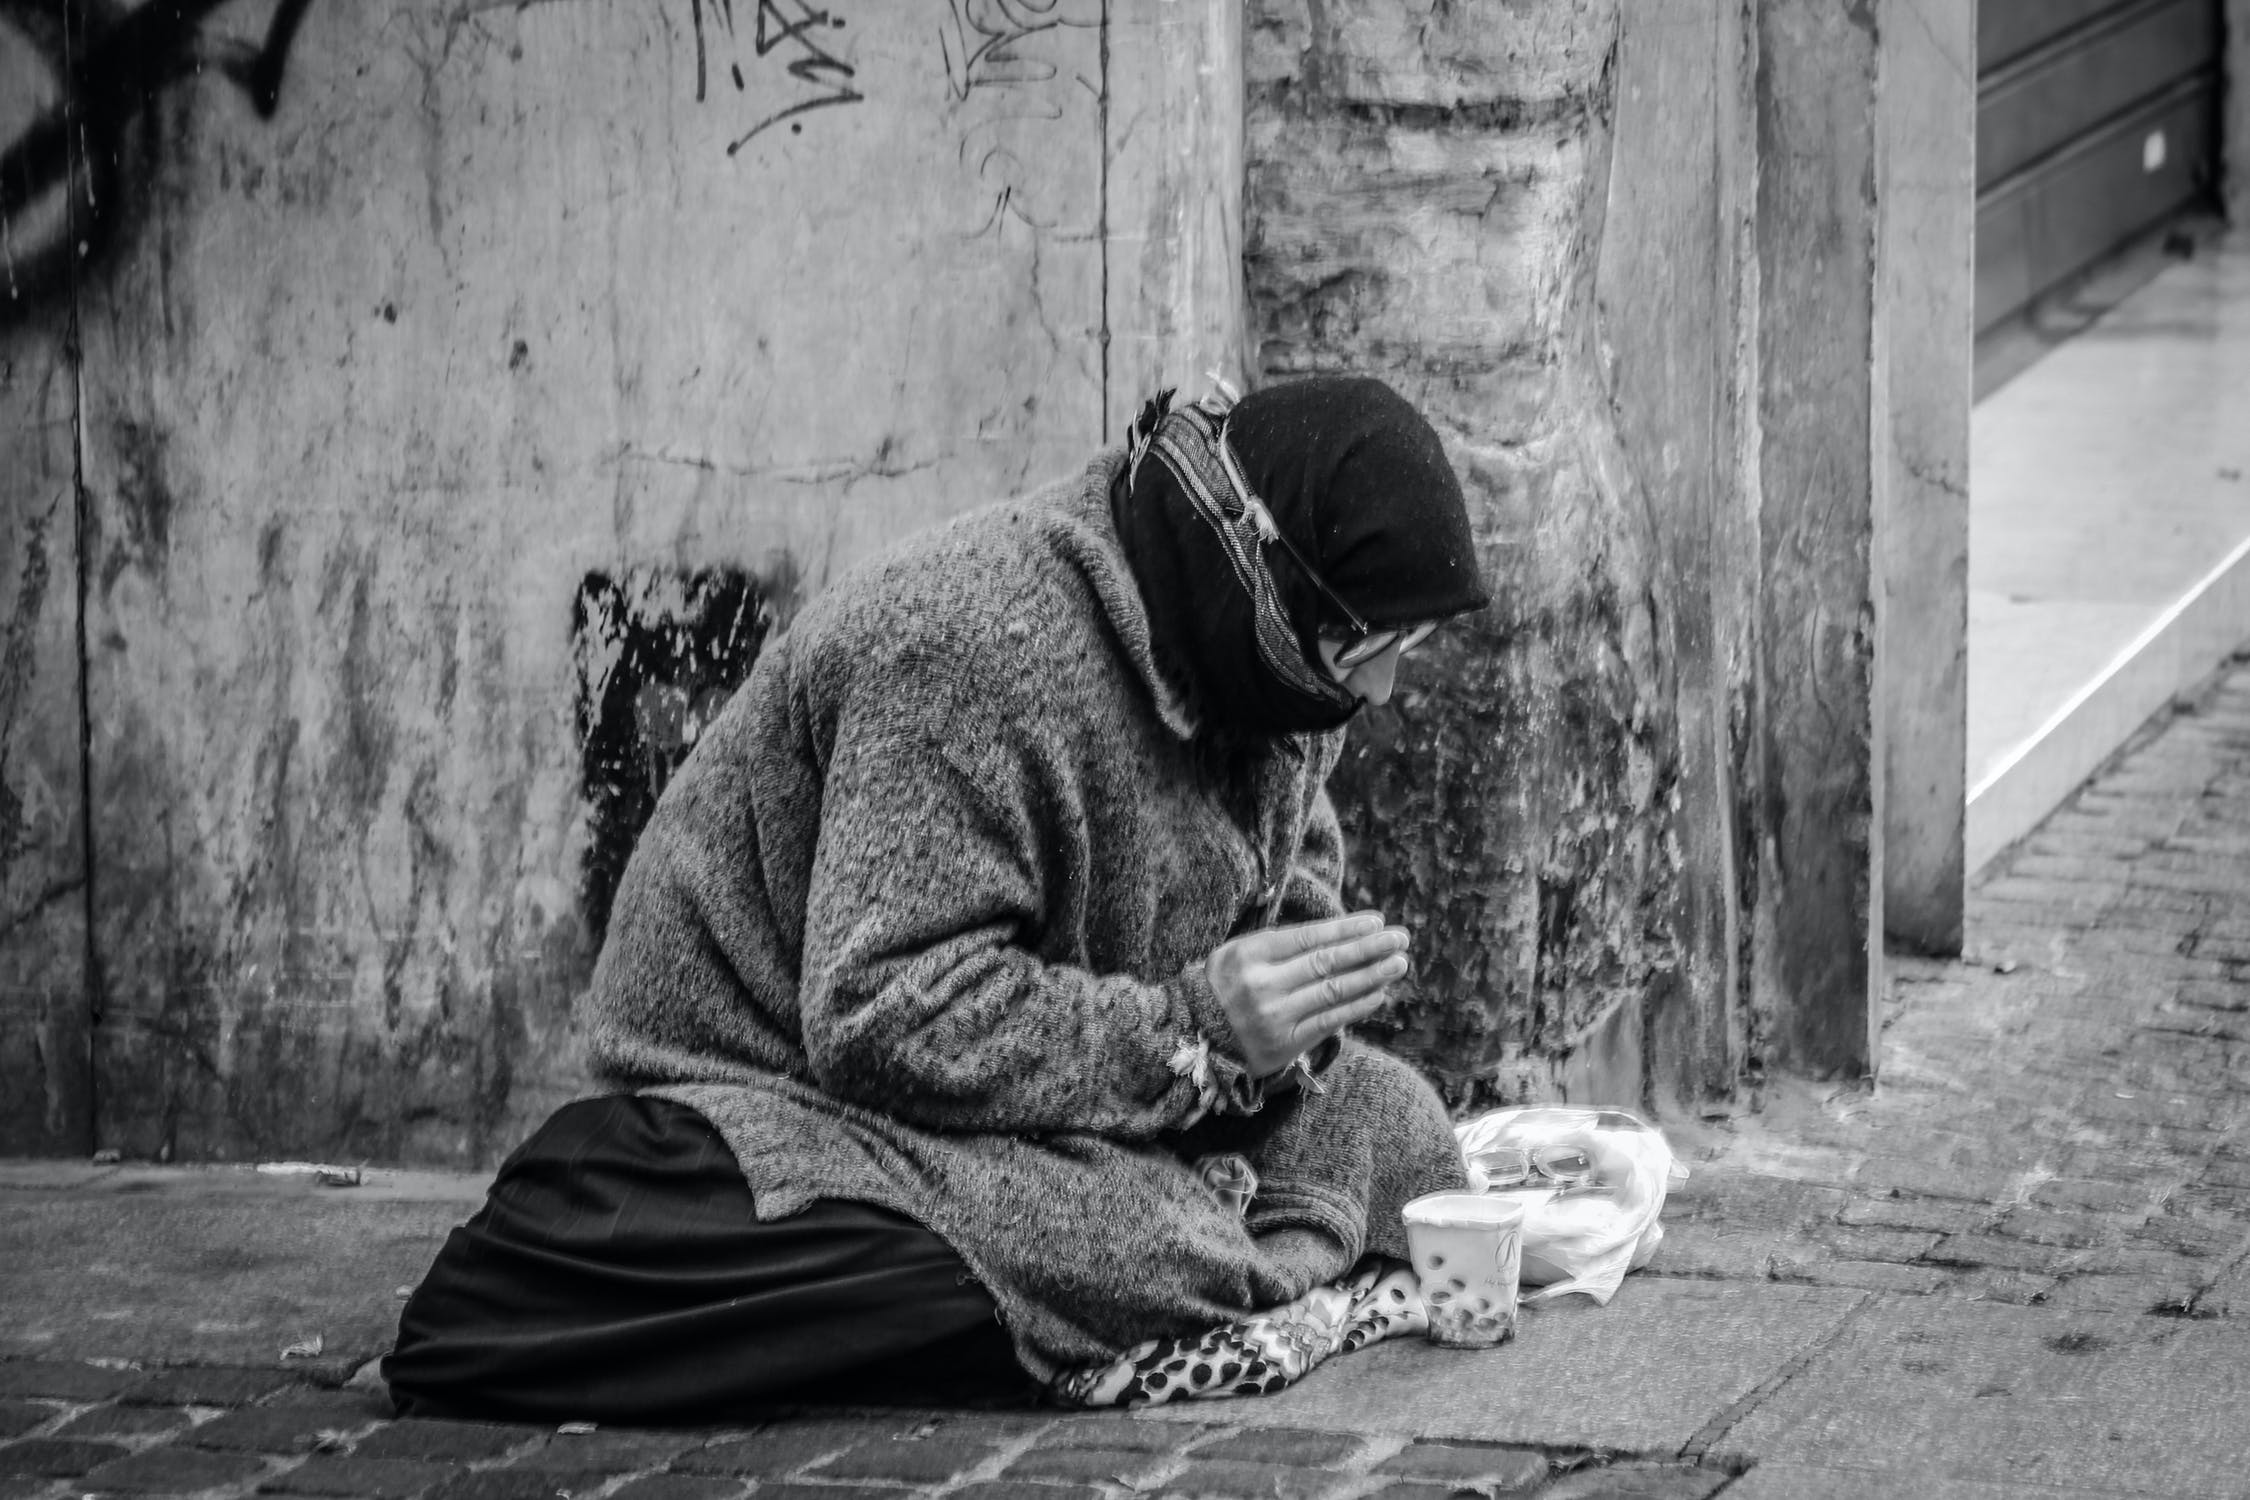 Destitute man on the street